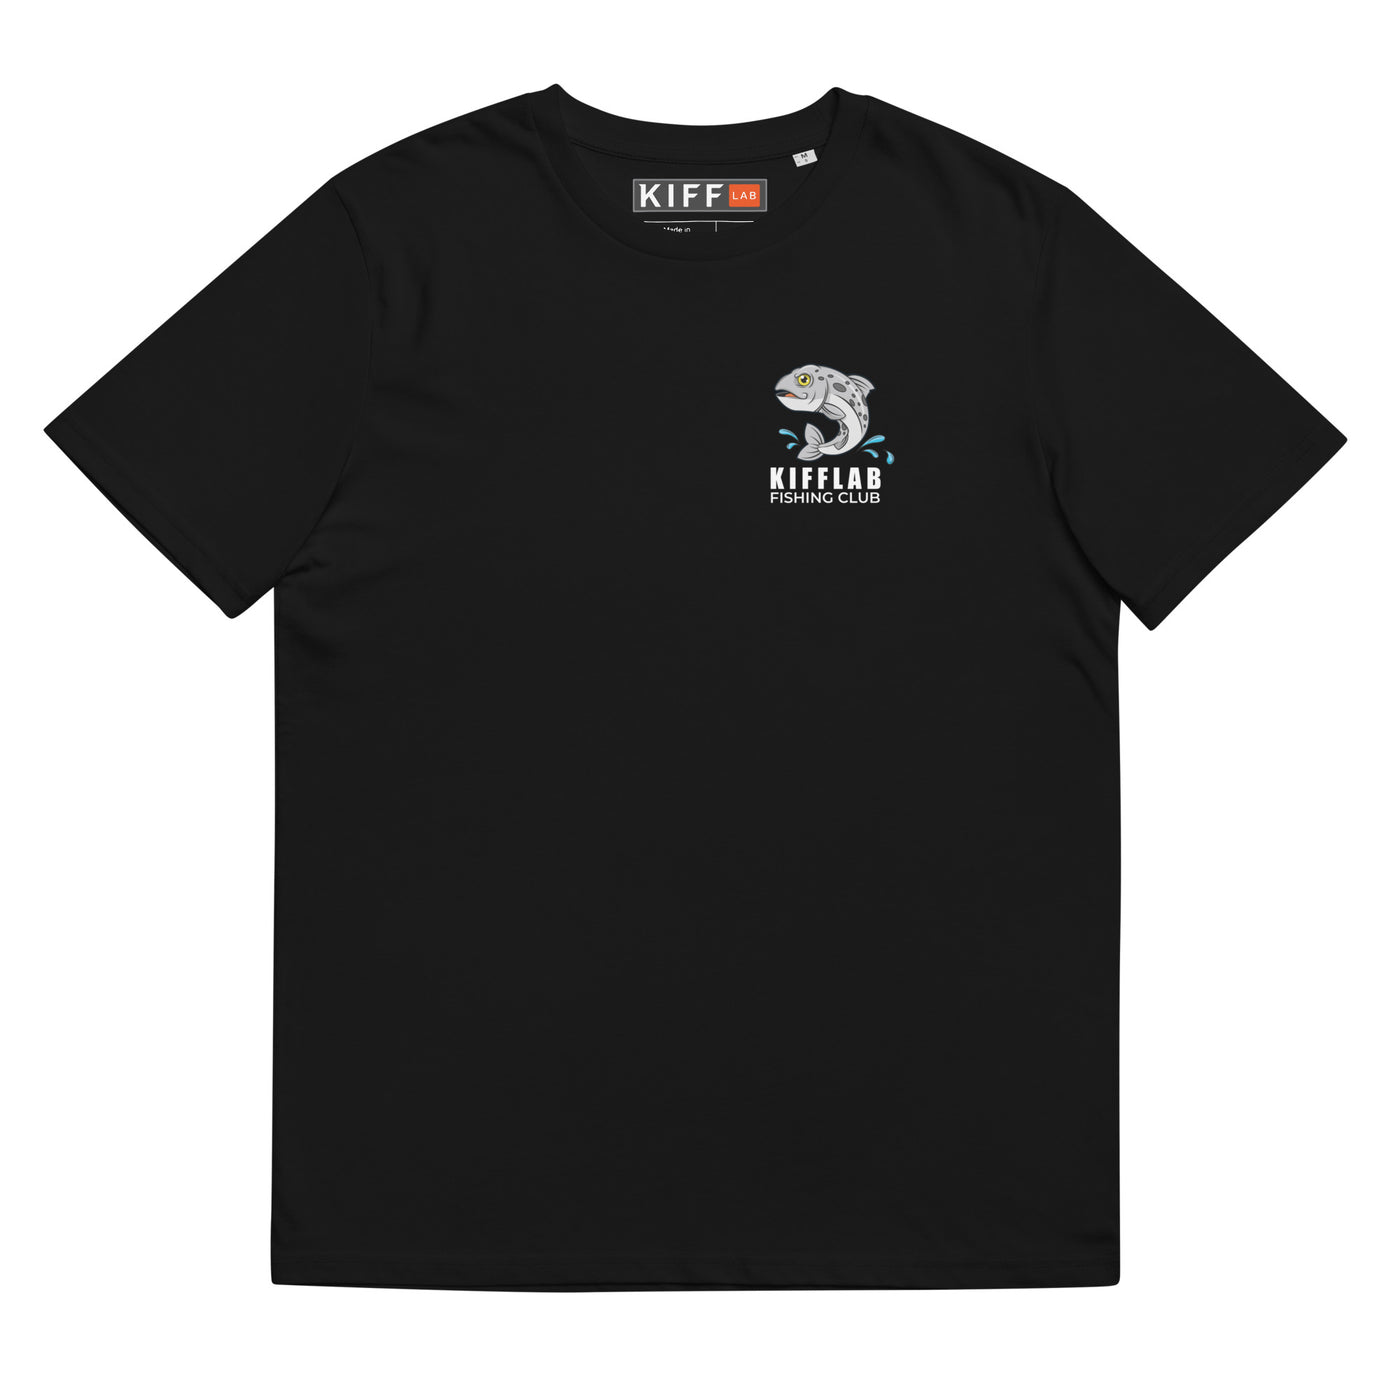 Kiff fishing club t-shirt